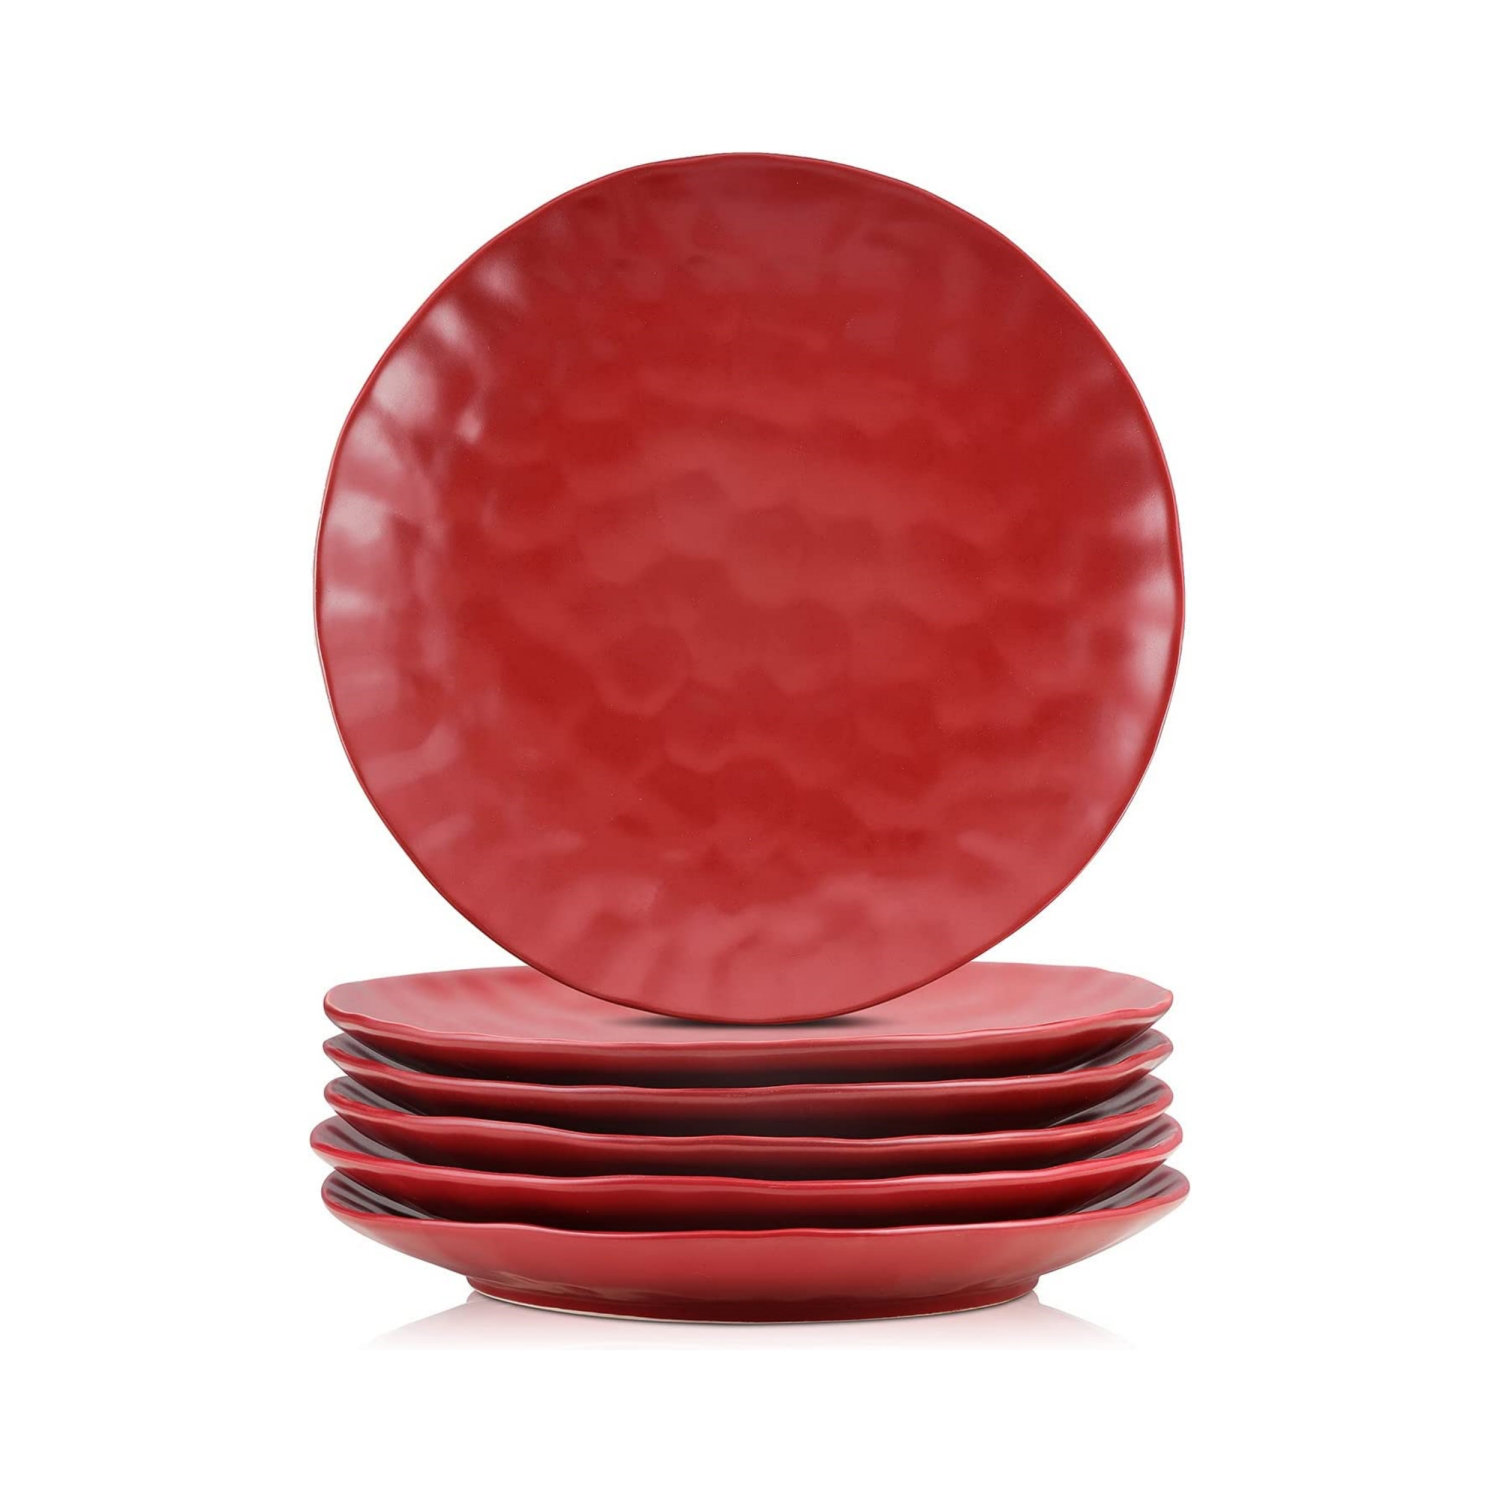 Red Dinner Plates